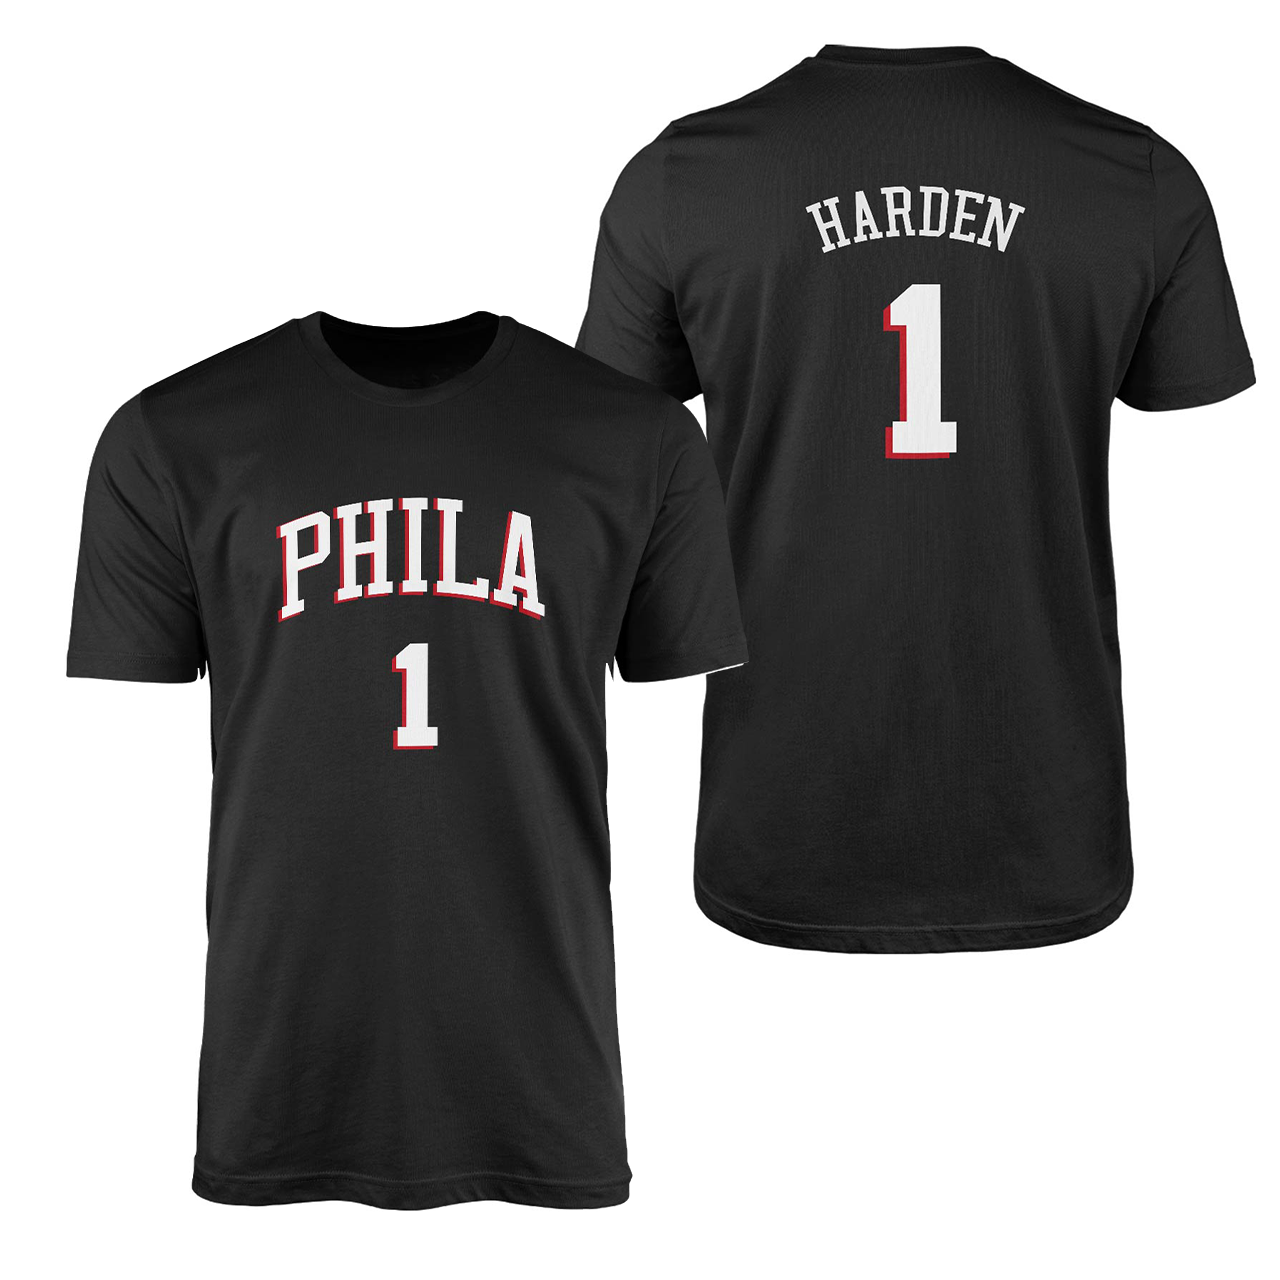 Phila Harden Forma Siyah Tshirt